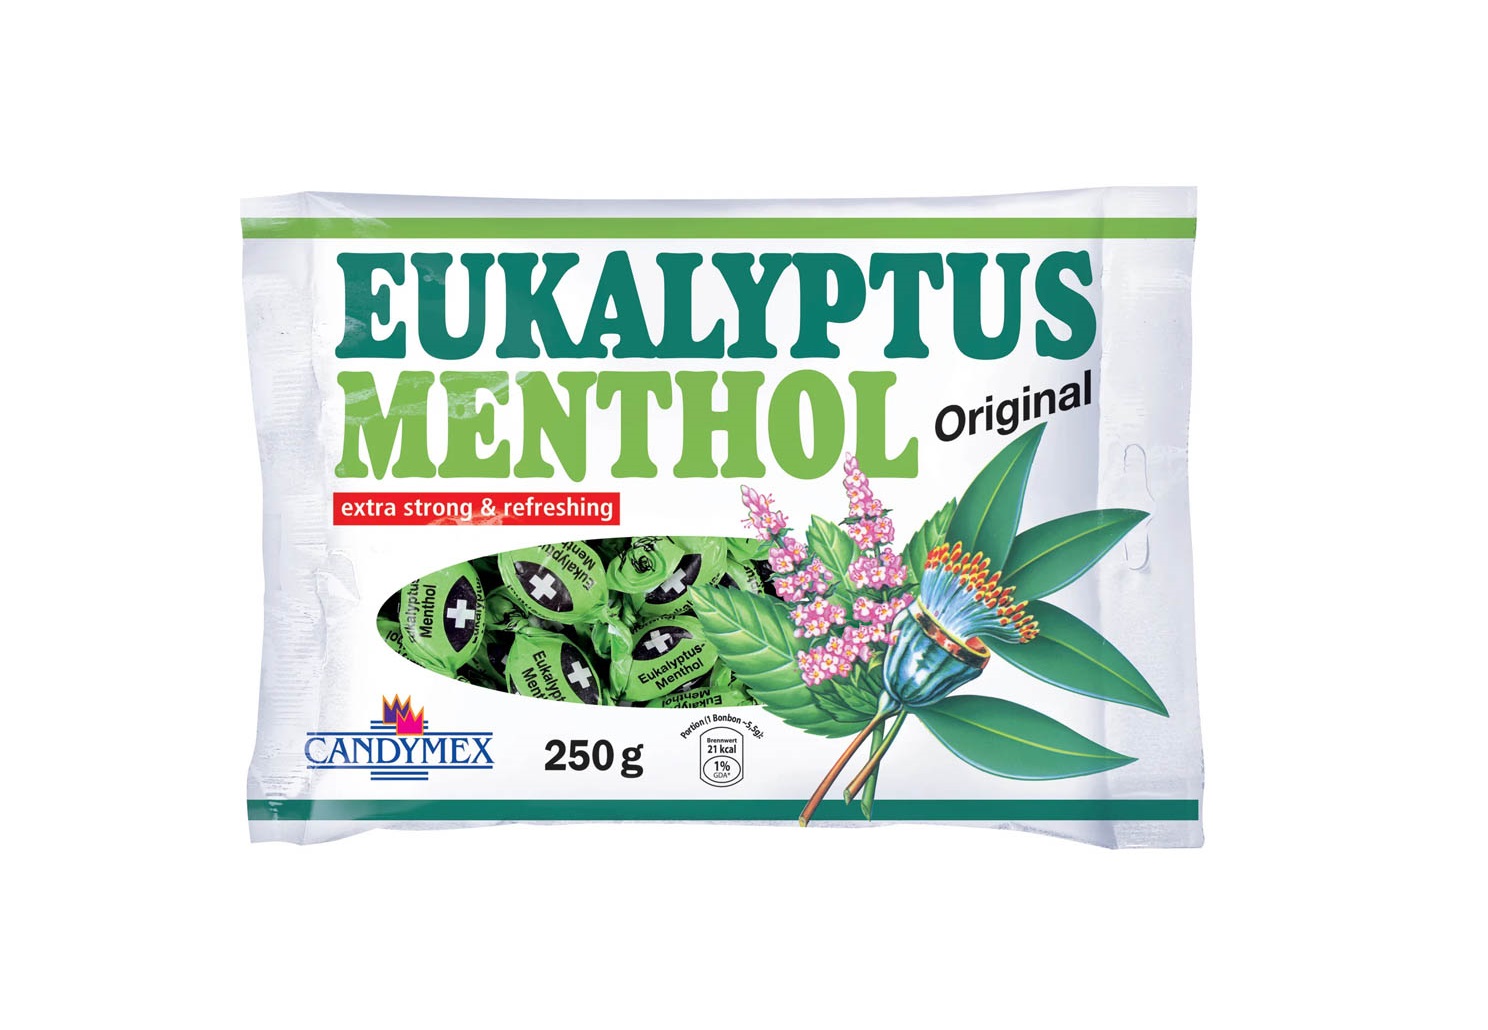 Candymex 250g pastille Eucalyptus menthol&#160;
